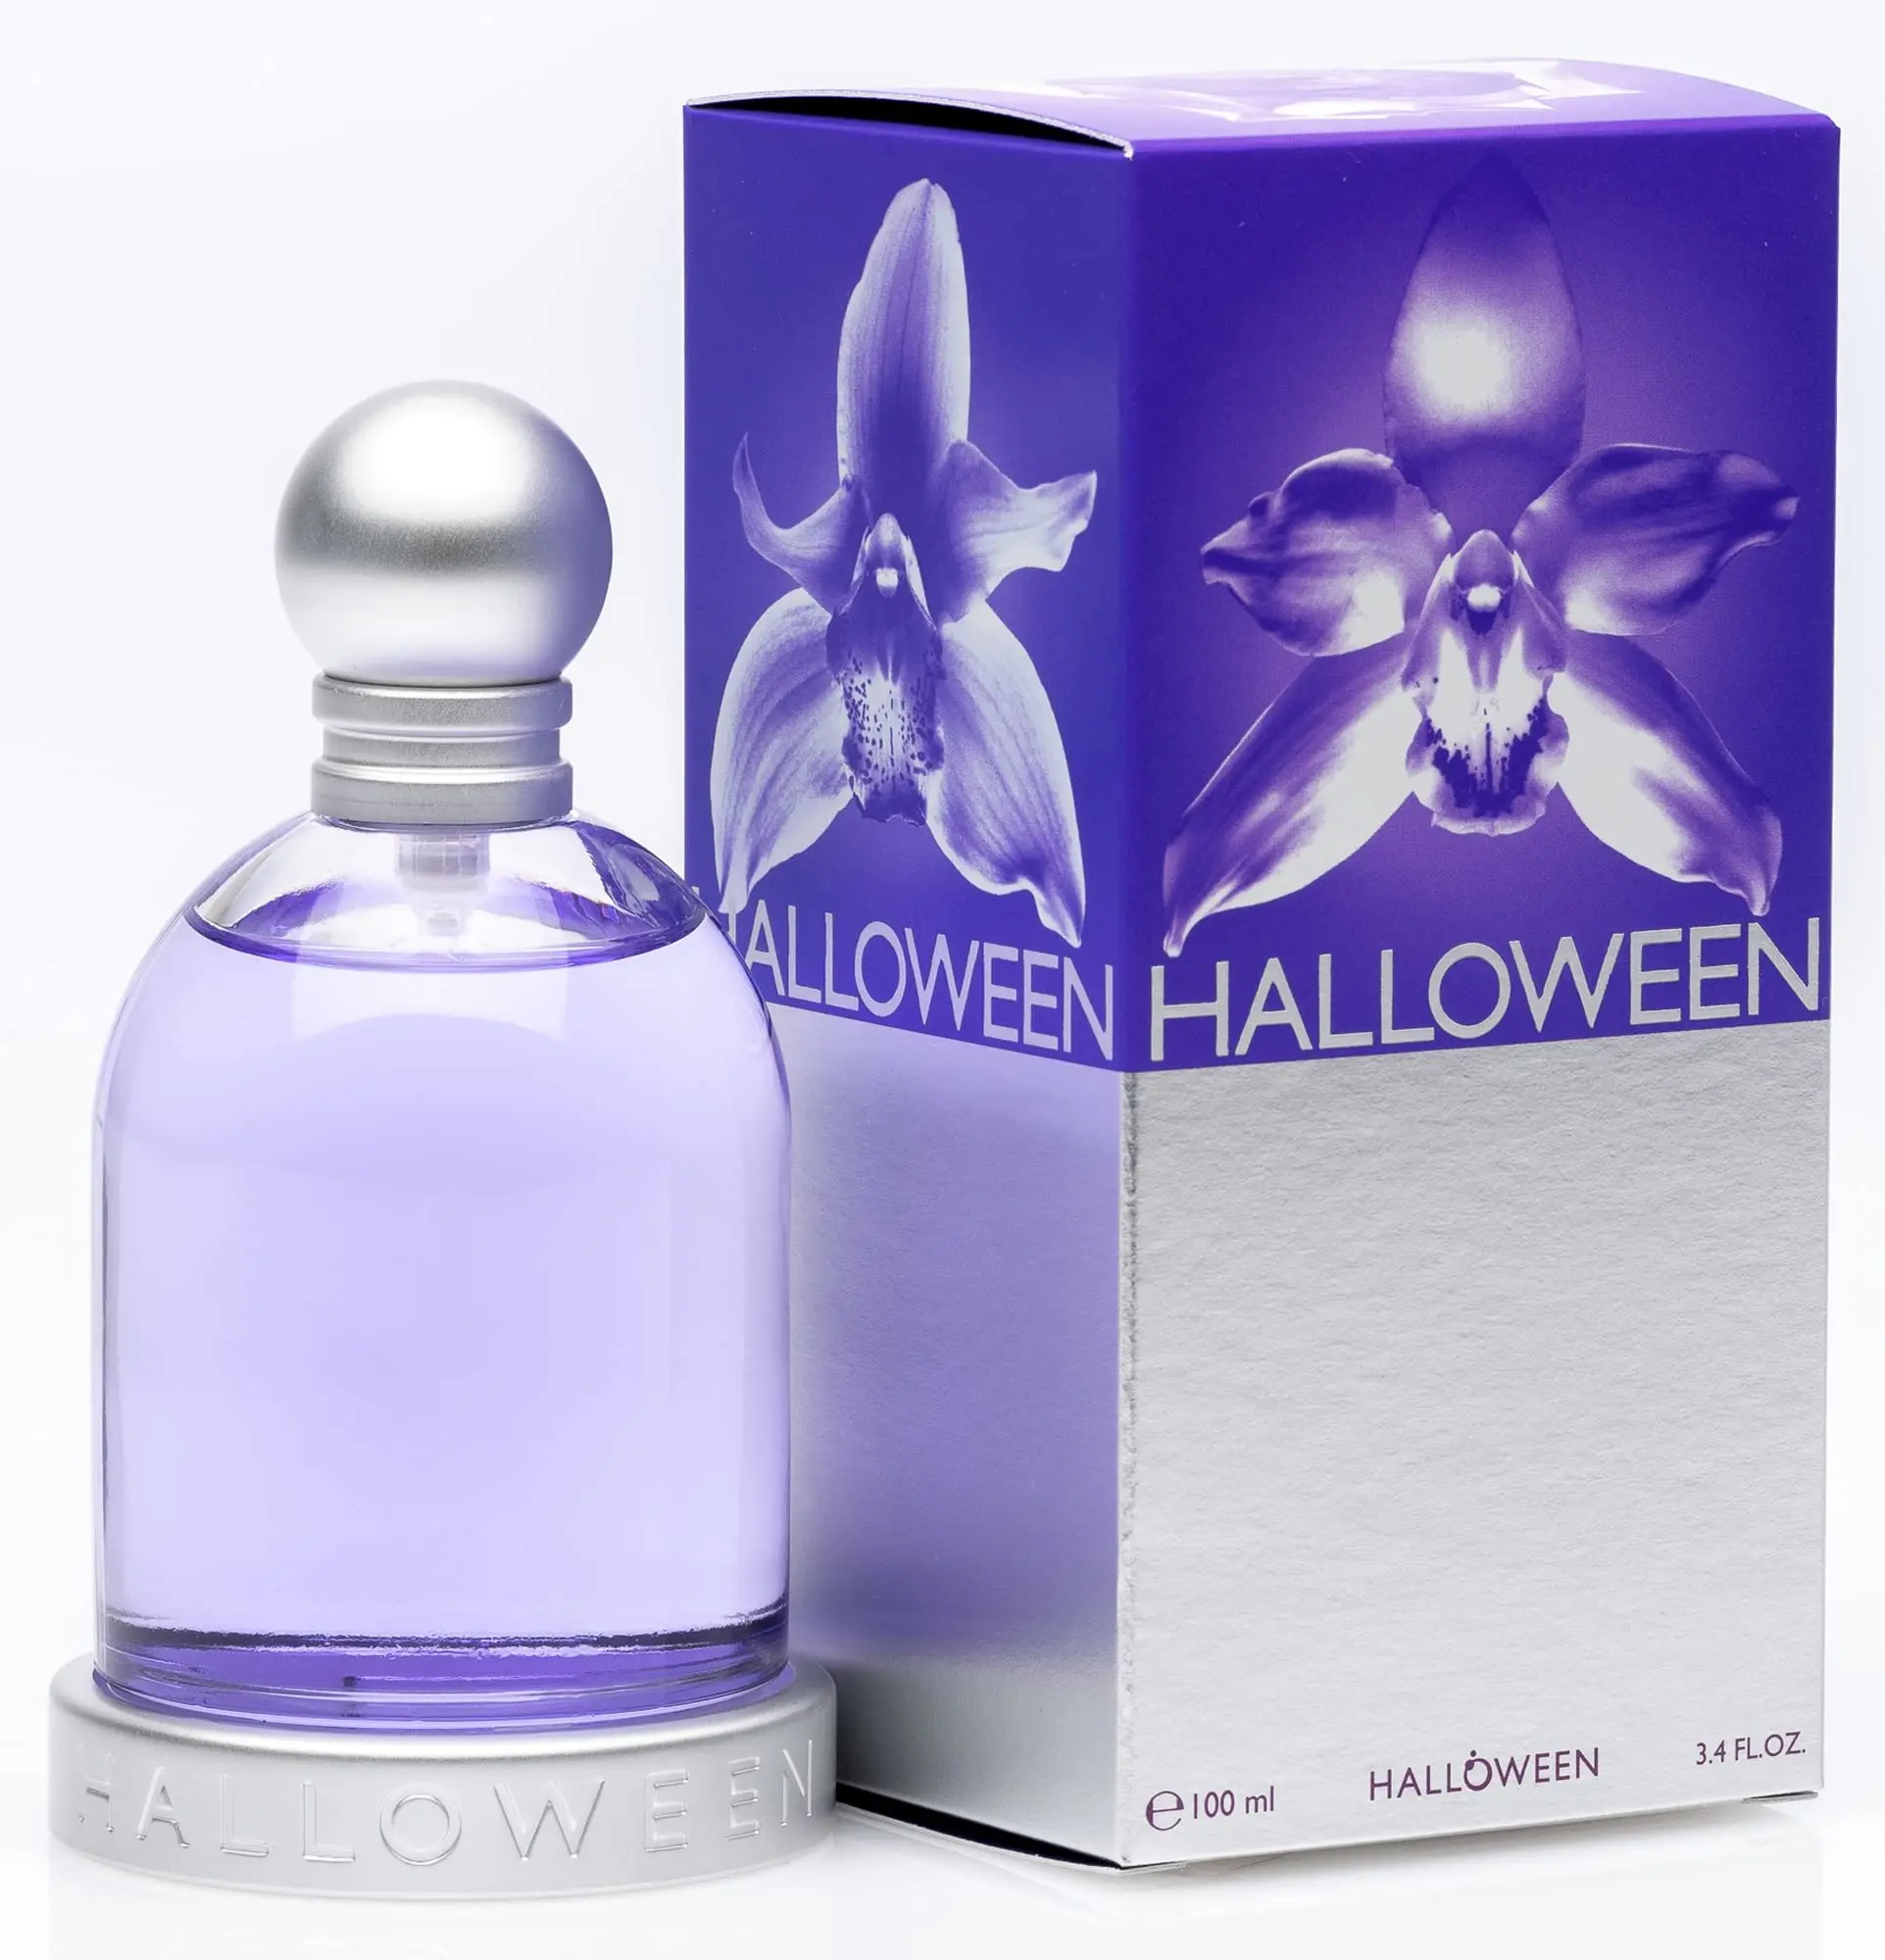 halloween nuevo perfume - Qué huele el perfume Halloween